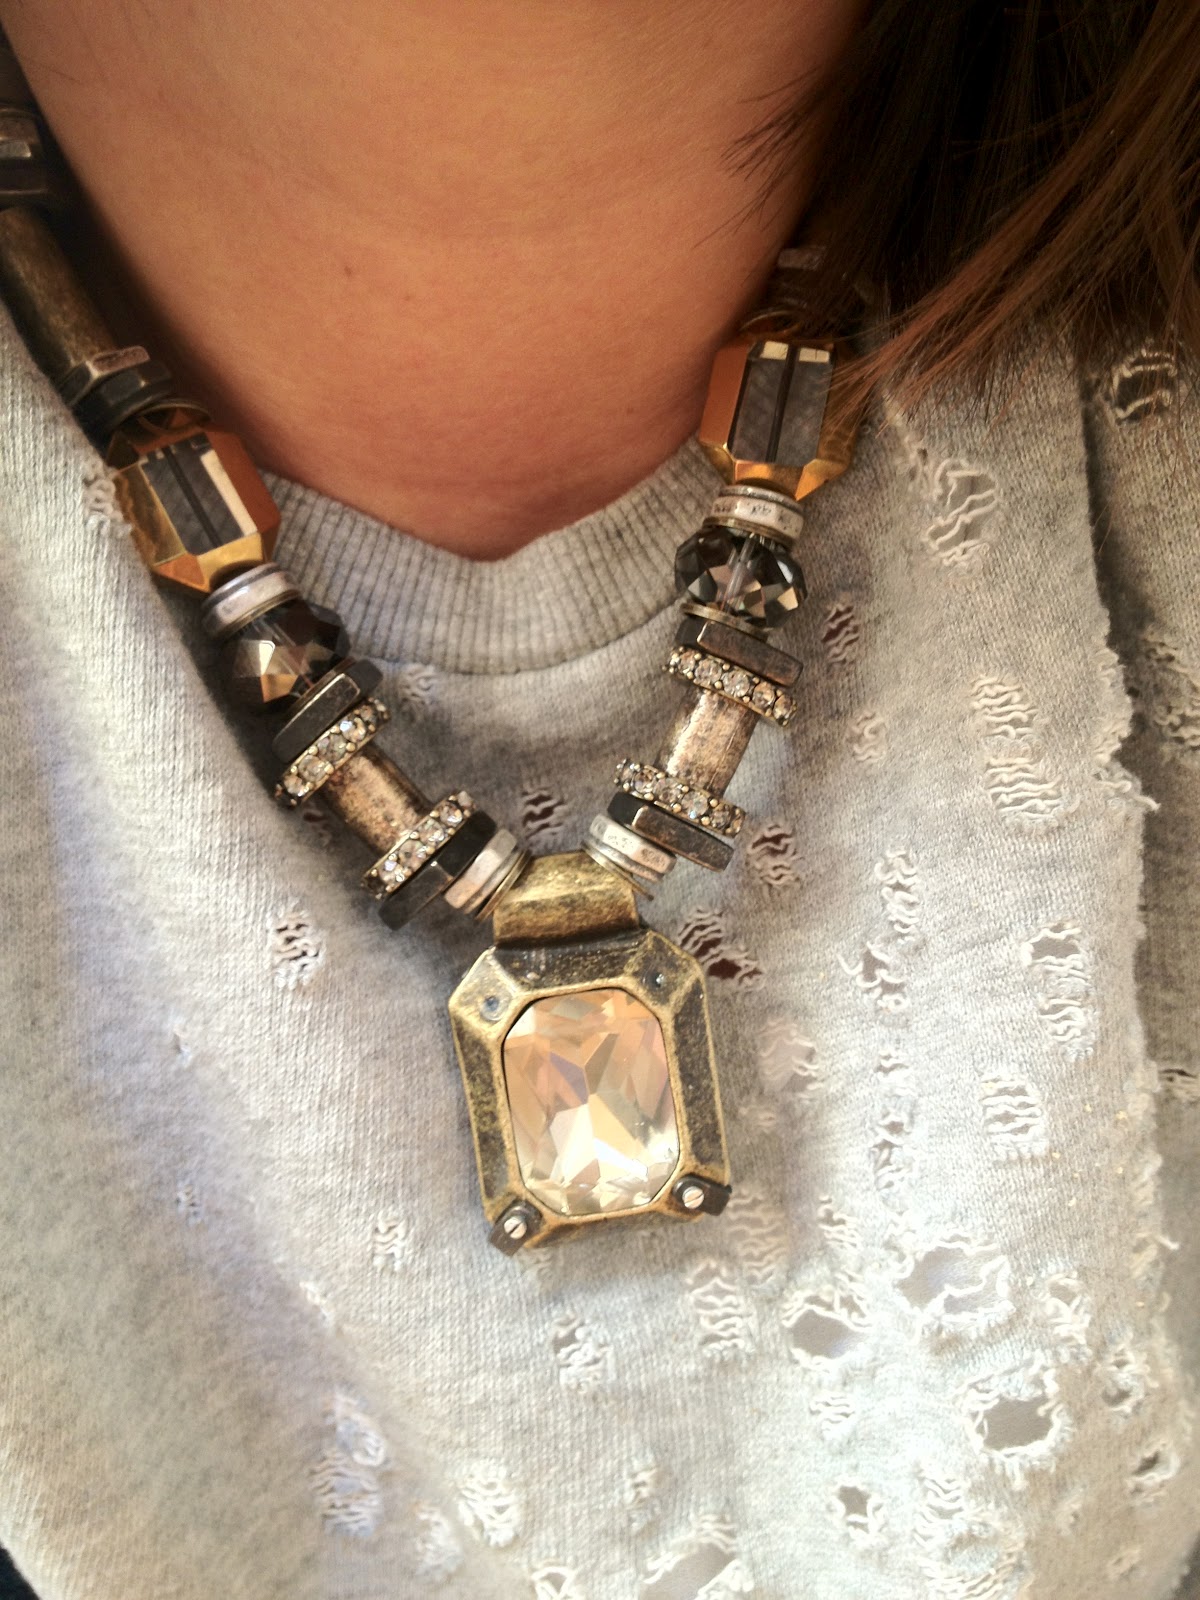 alinka: All Saints necklace..